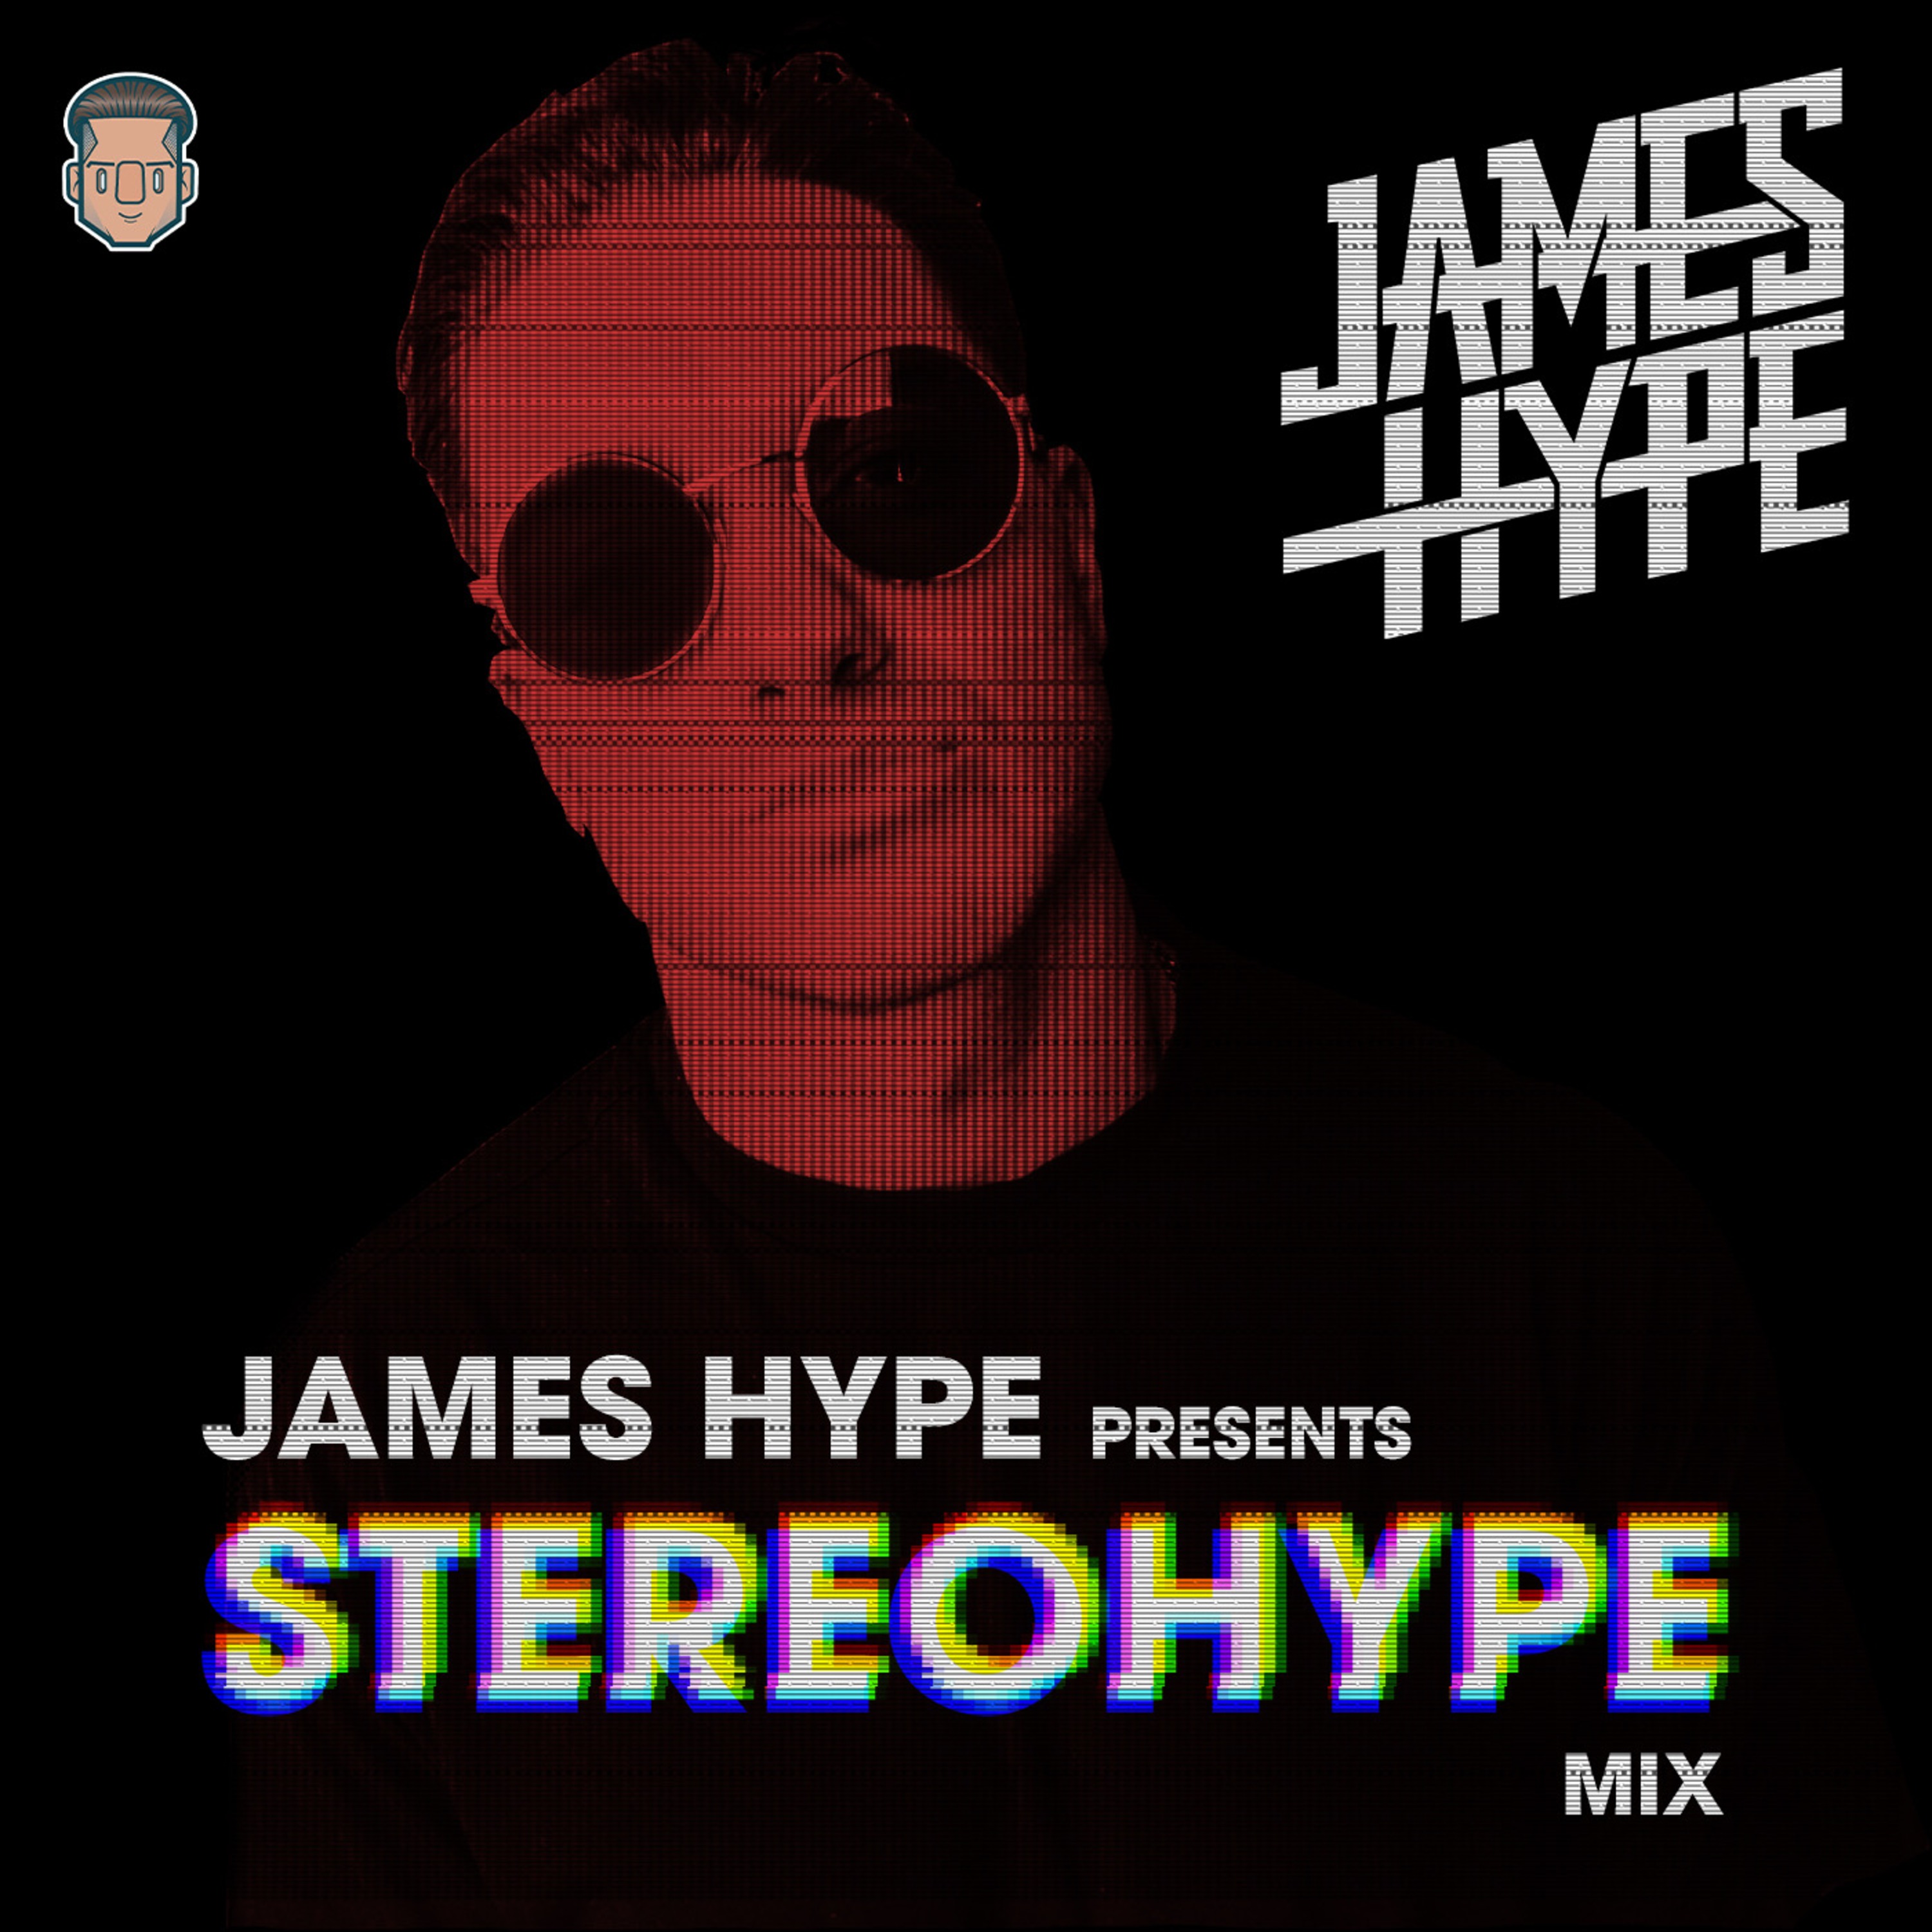 James hype ferrari. James Hype. Fisher диджей. Stereohype records. James Hype британский диджей.